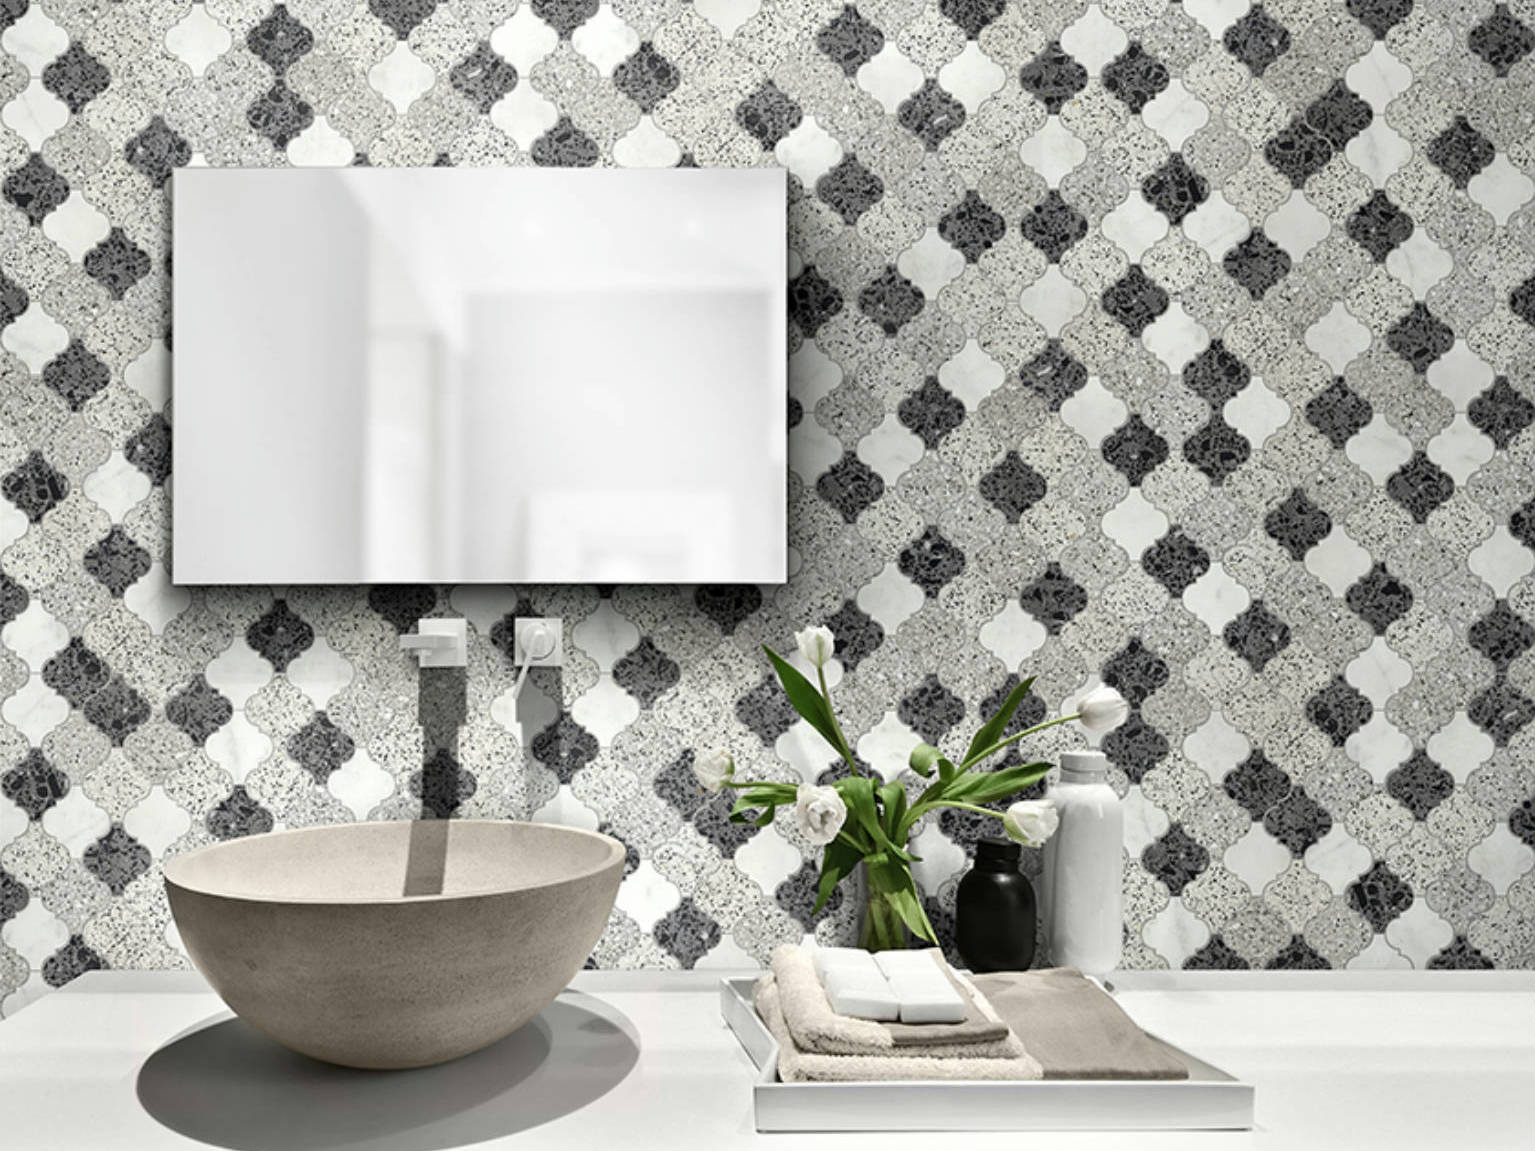 Lantern Terrazzo Marble White, Grey, Black Mix Mosaic | Qualis Ceramica | Luxury Tile and Vinyl at affordable prices